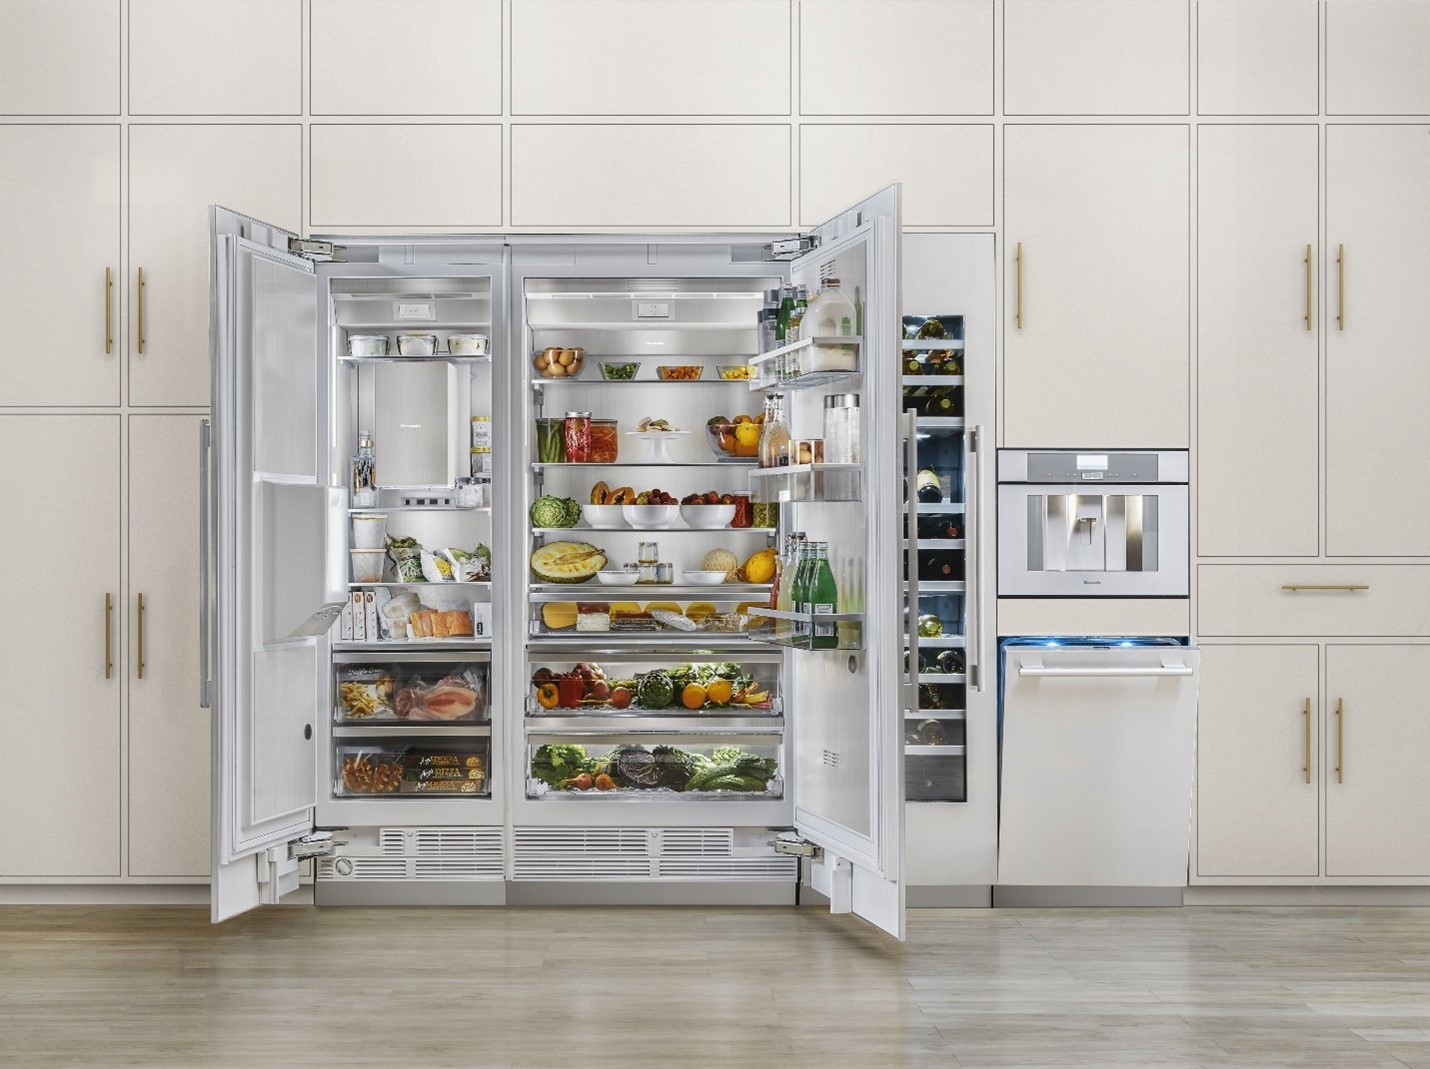 Counter Depth Refrigerator Dimensions - Size Guide